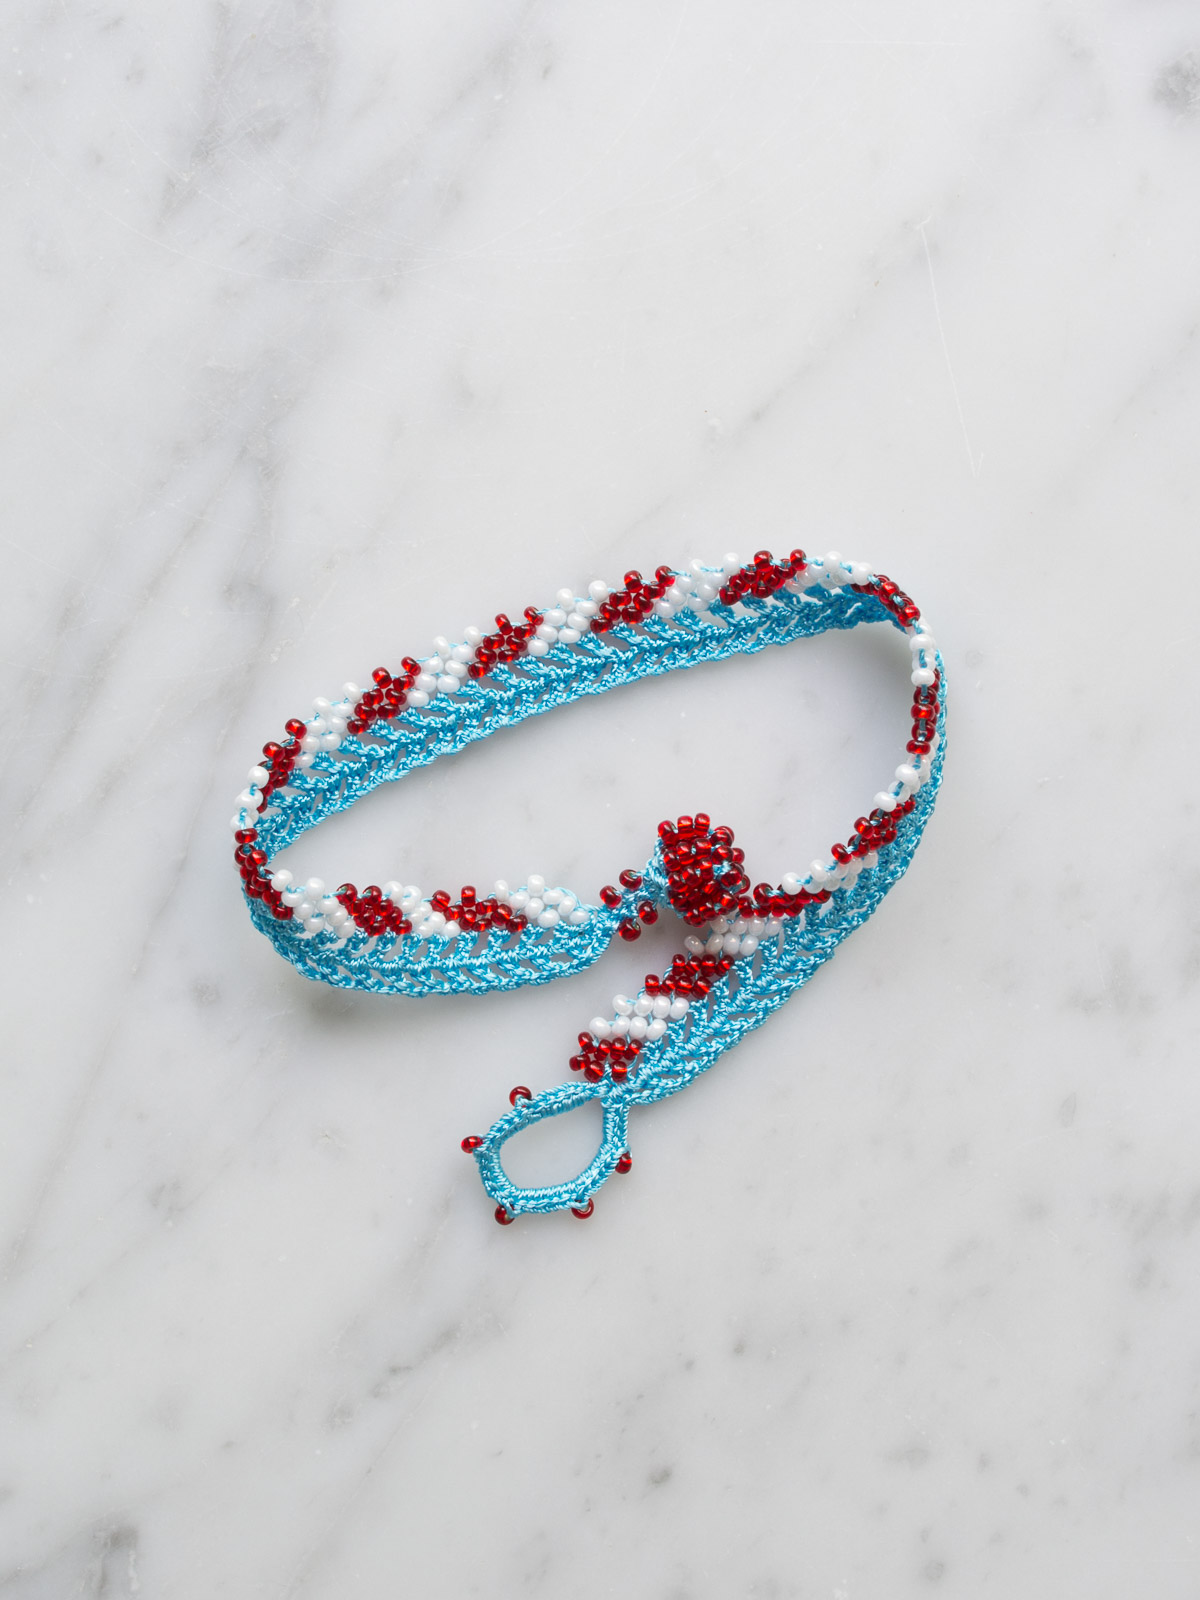 How to do Crochet Lace Tape Bracelet - YouTube